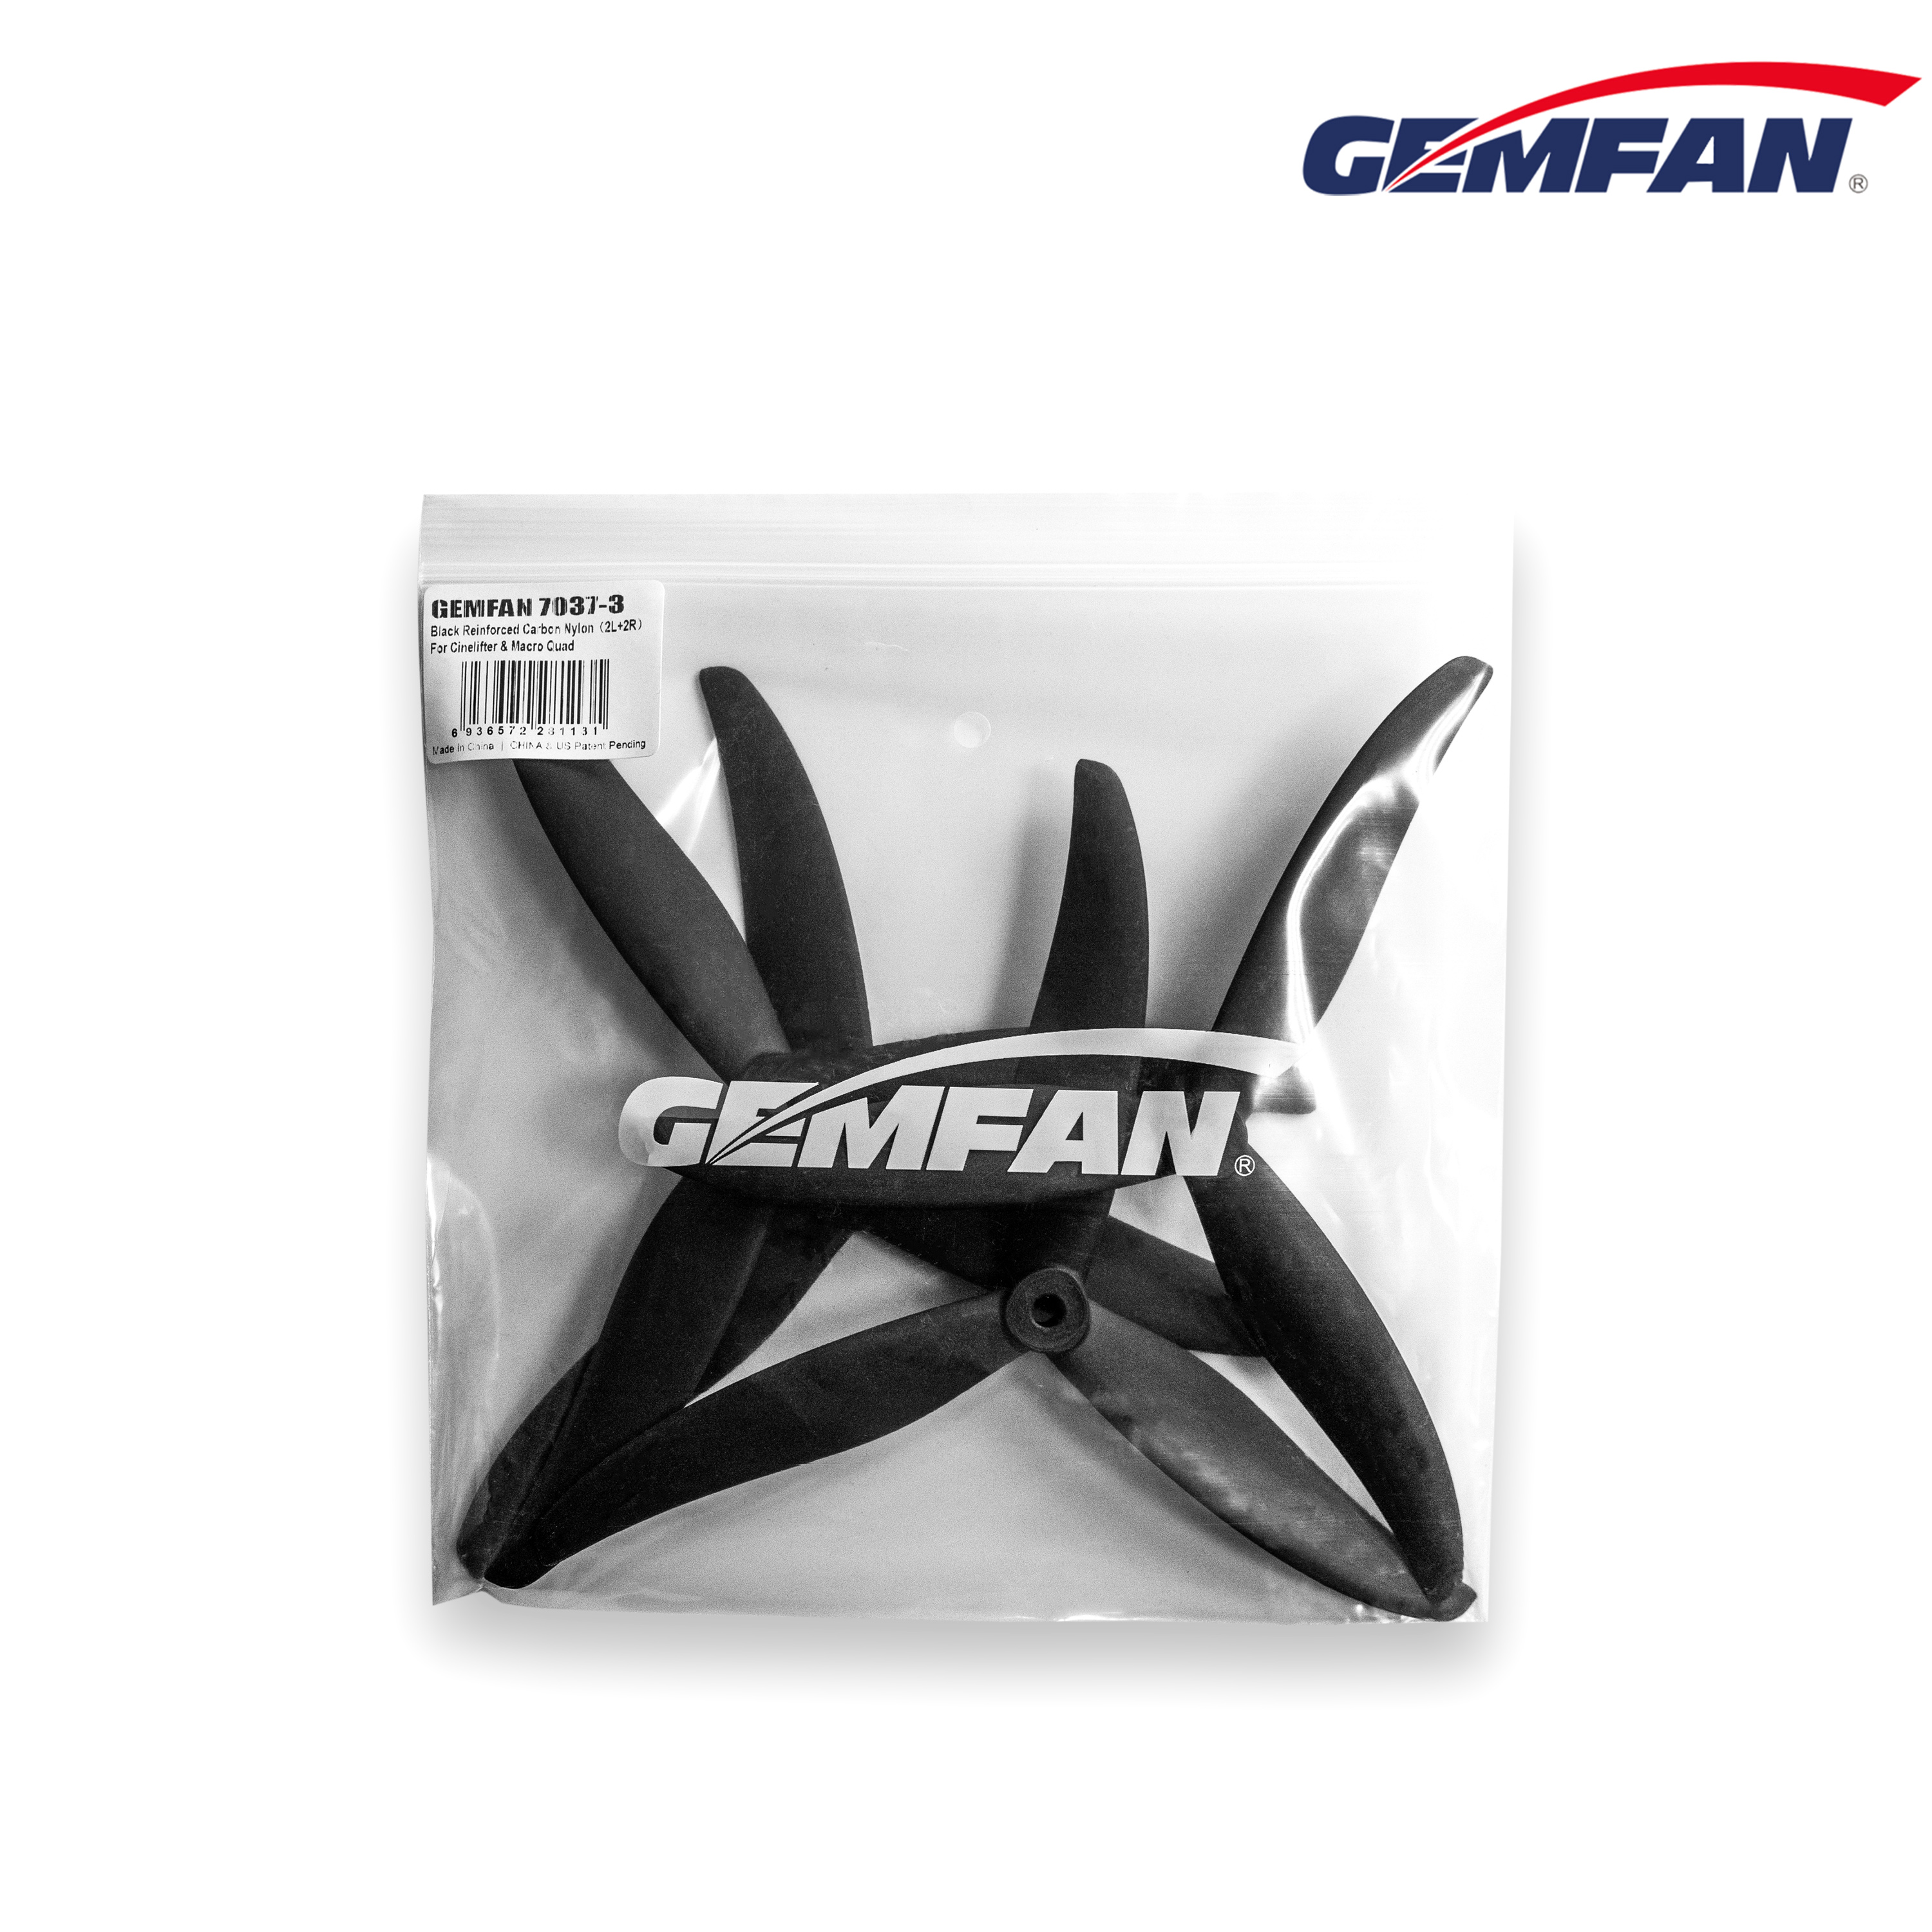 Gemfan 7037-3 Carbon Nylon for Cinelifter & Macro Quad